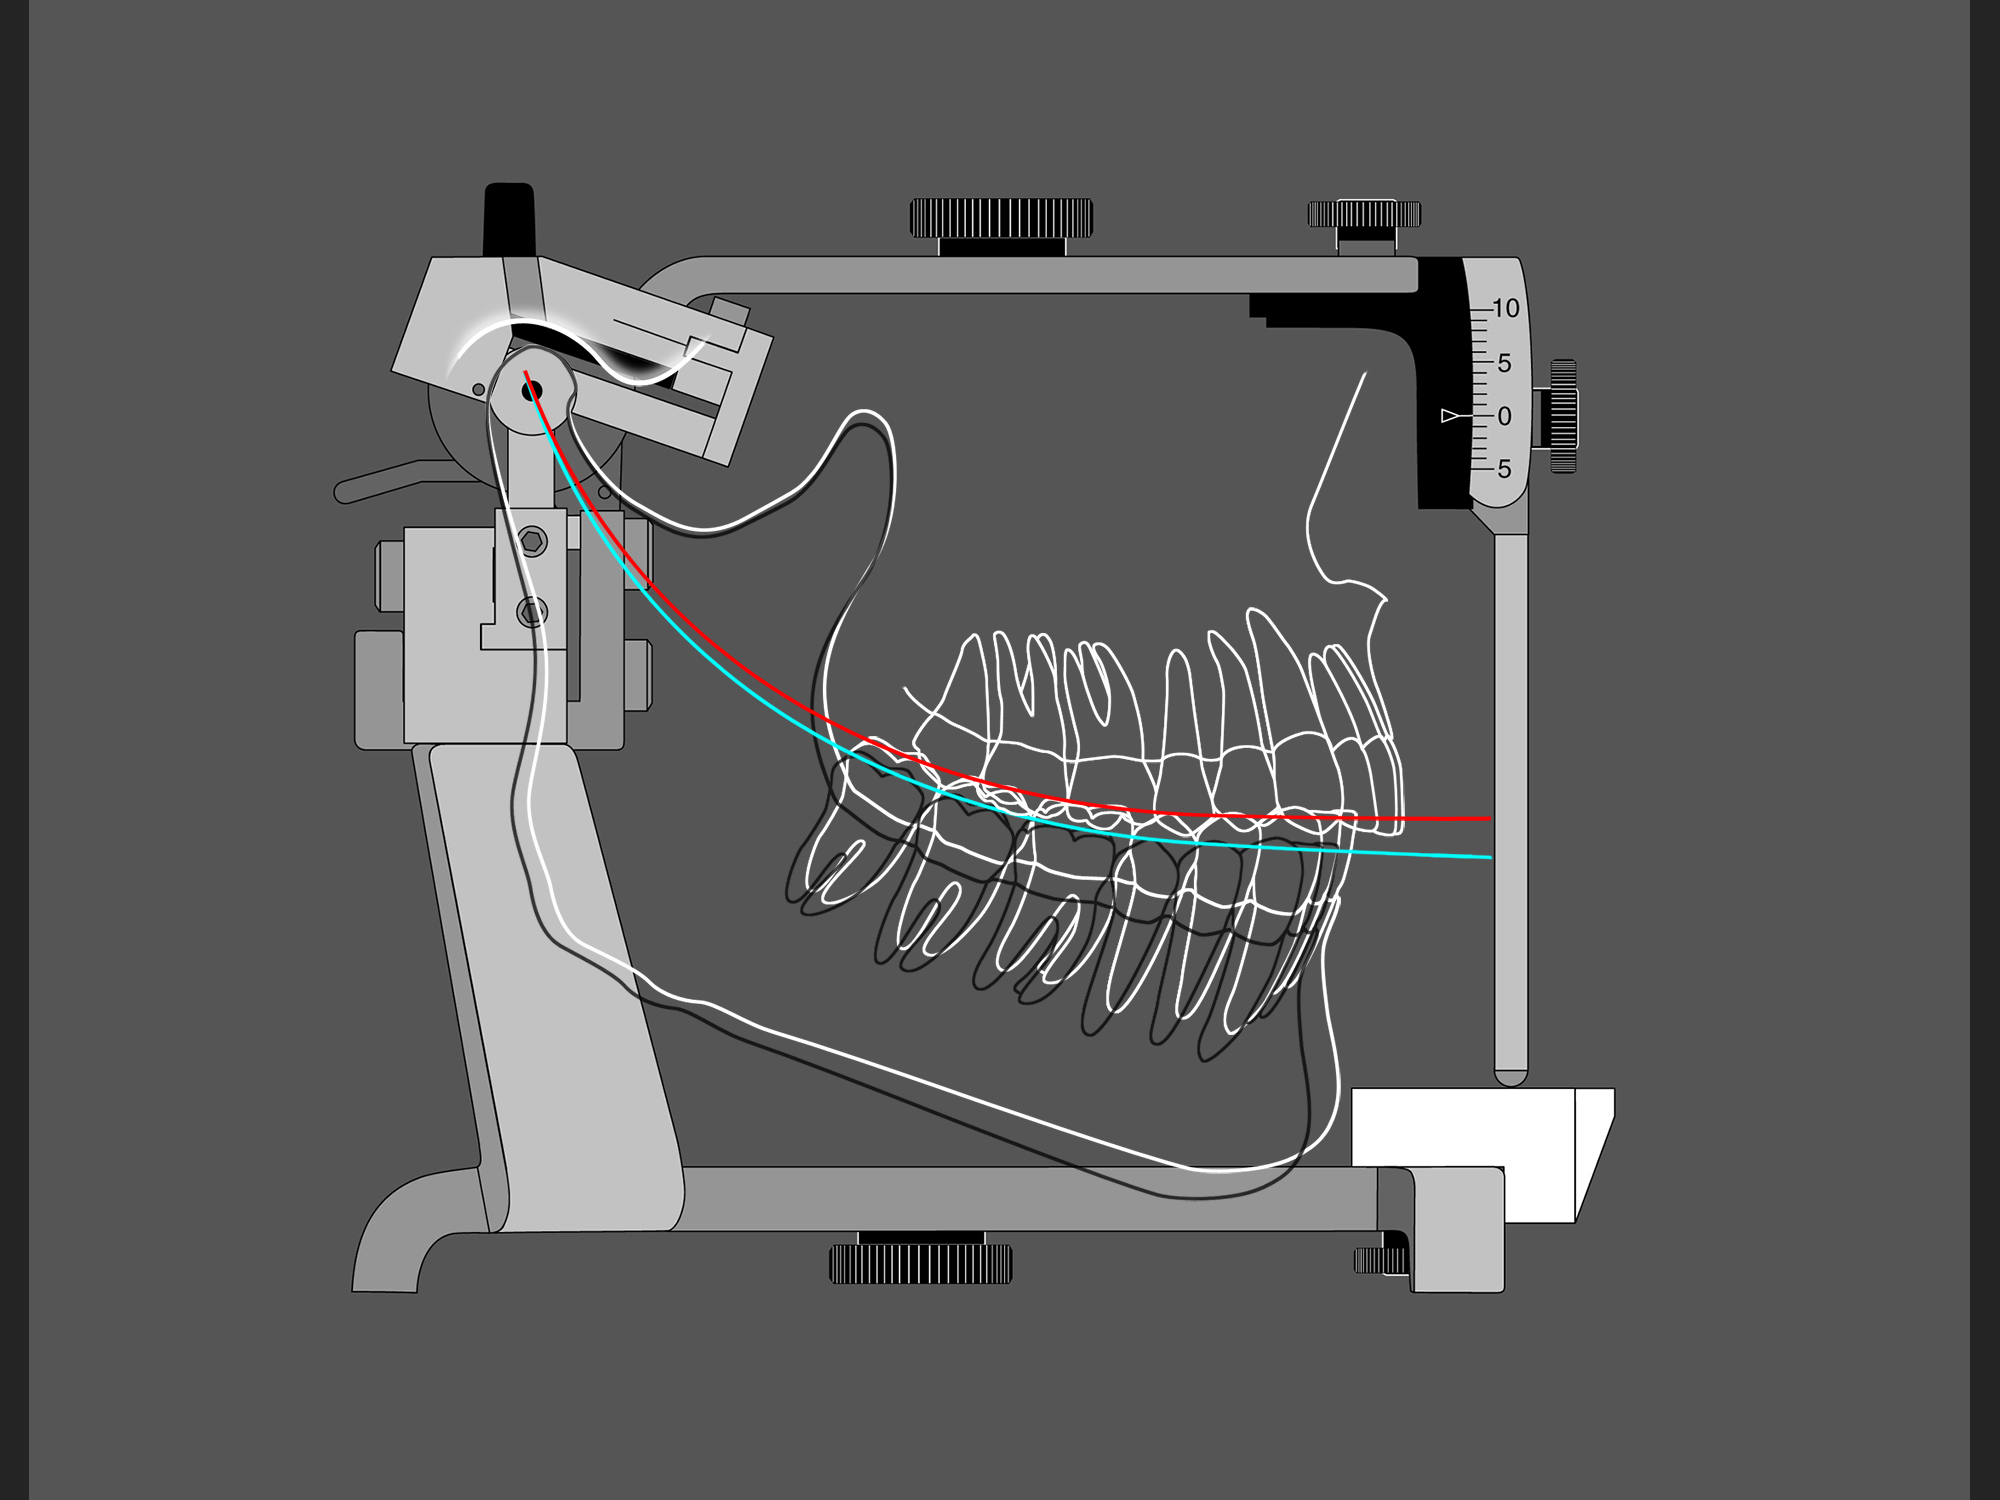 Dental Articulator, Illustrator illustration for slide, 2004.